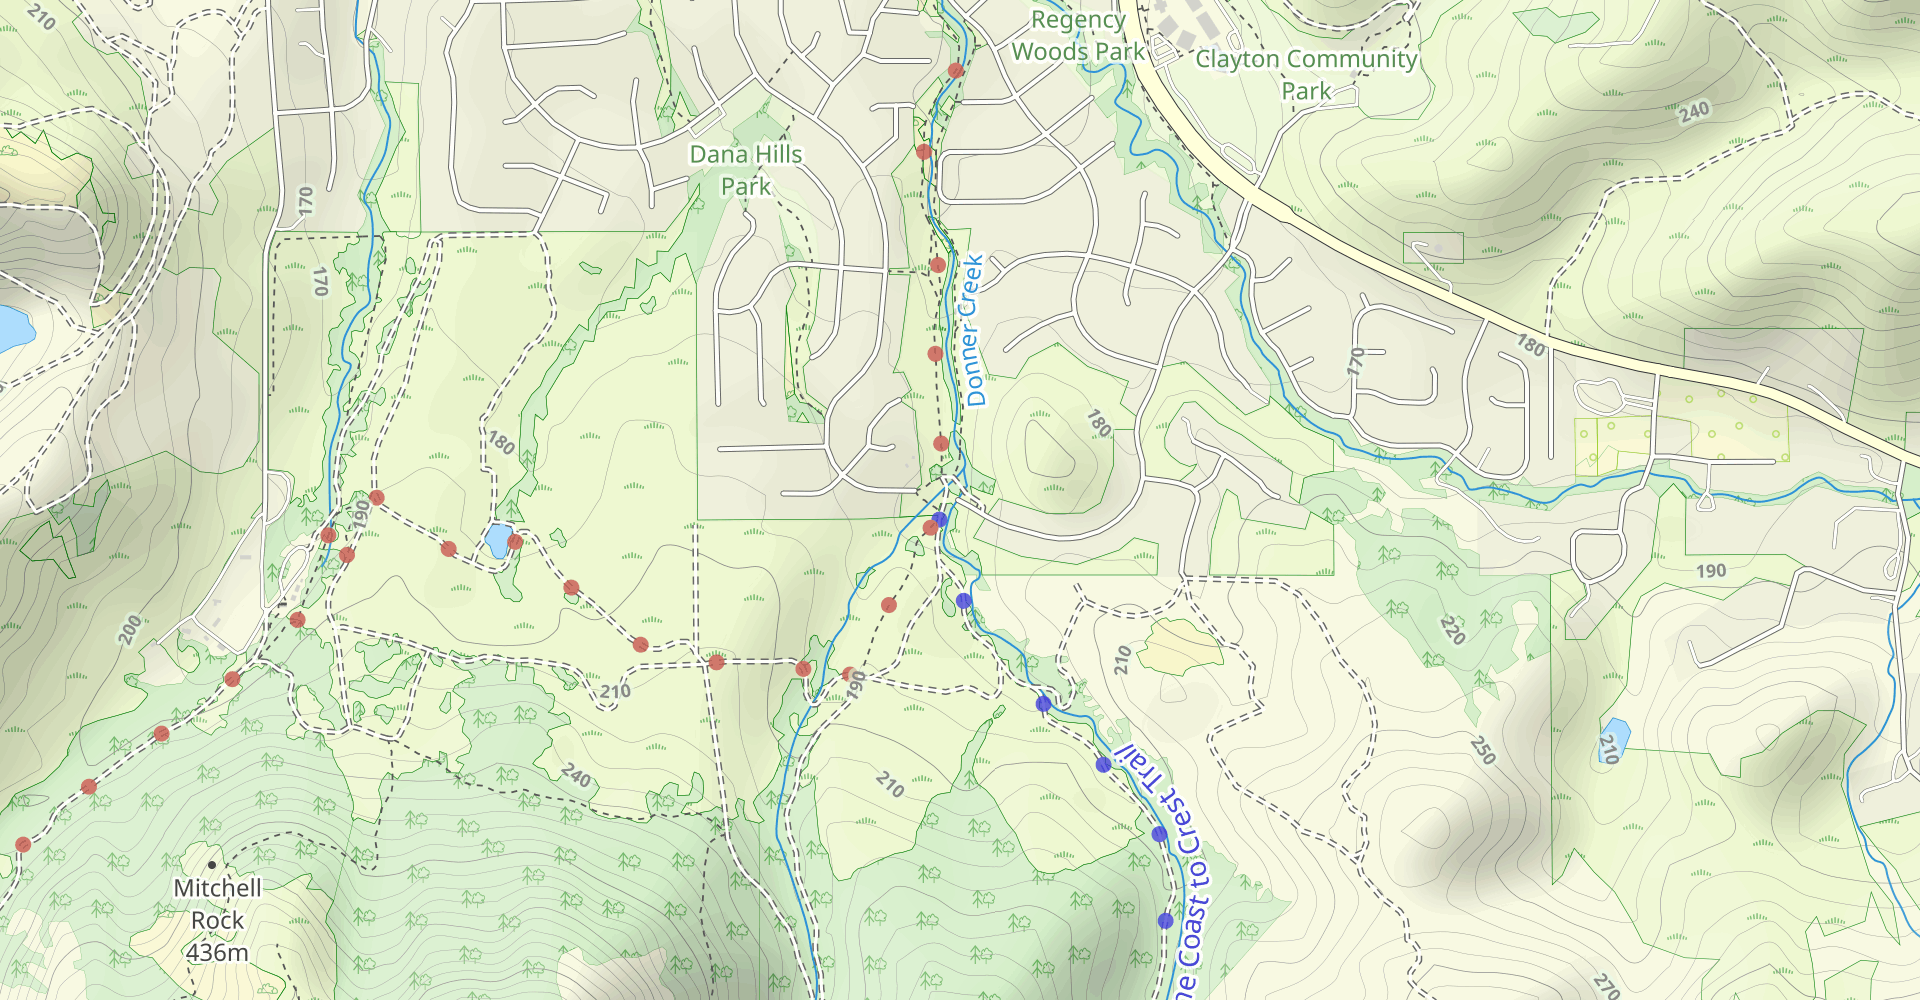 North Peak via Donner Canyon Road and Meridian Ridge Road